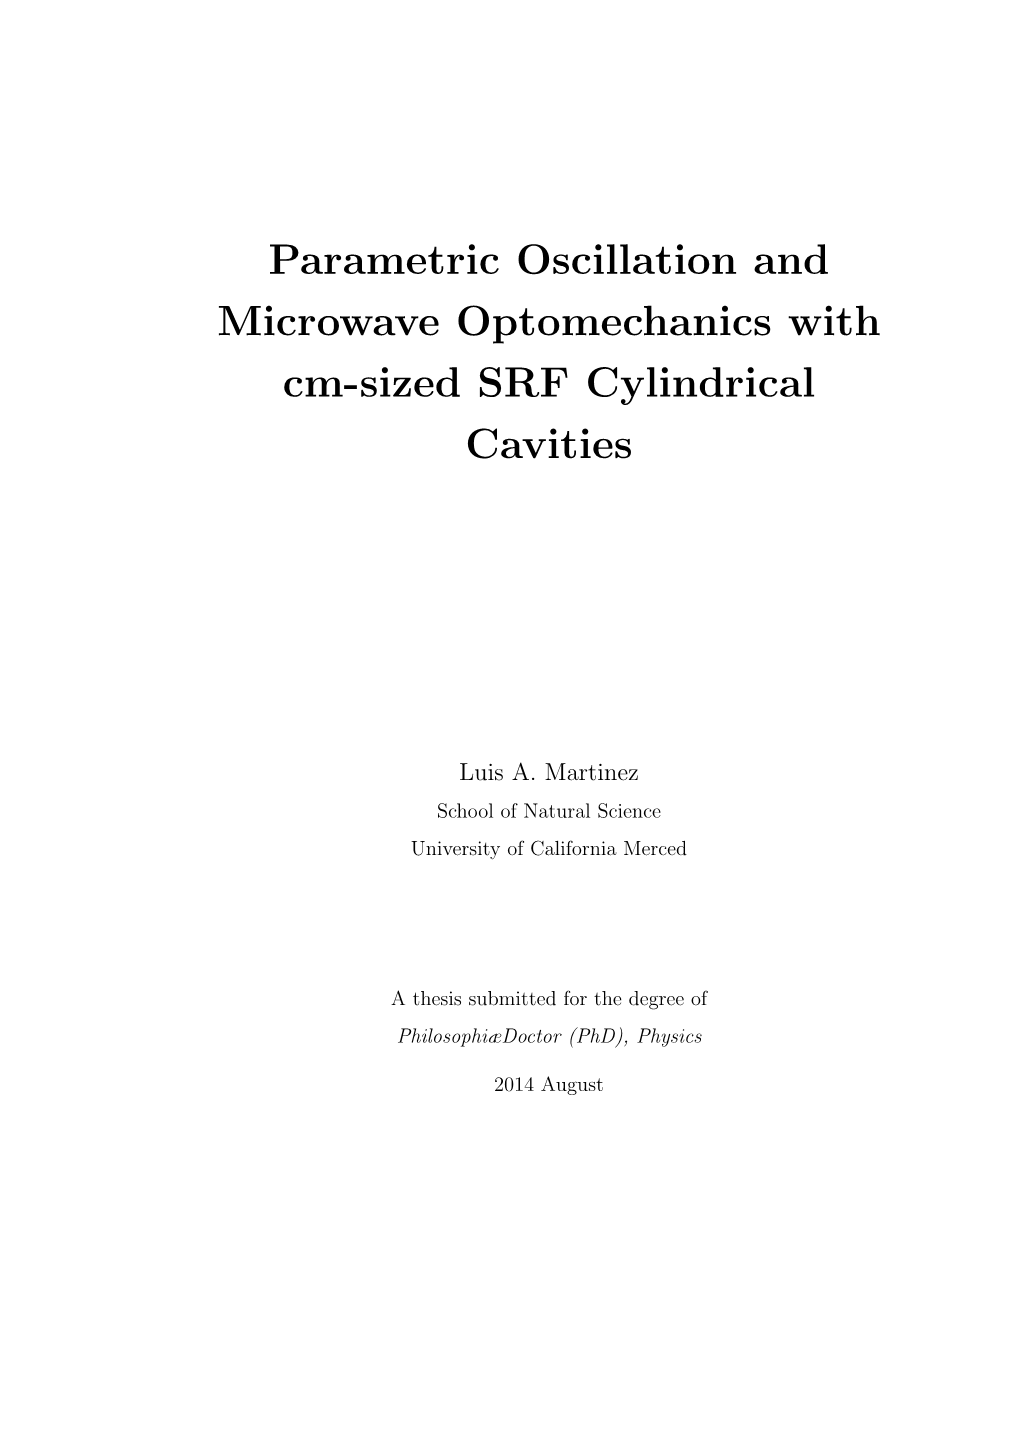 Parametric Oscillation and Microwave Optomechanics with Cm-Sized SRF Cylindrical Cavities